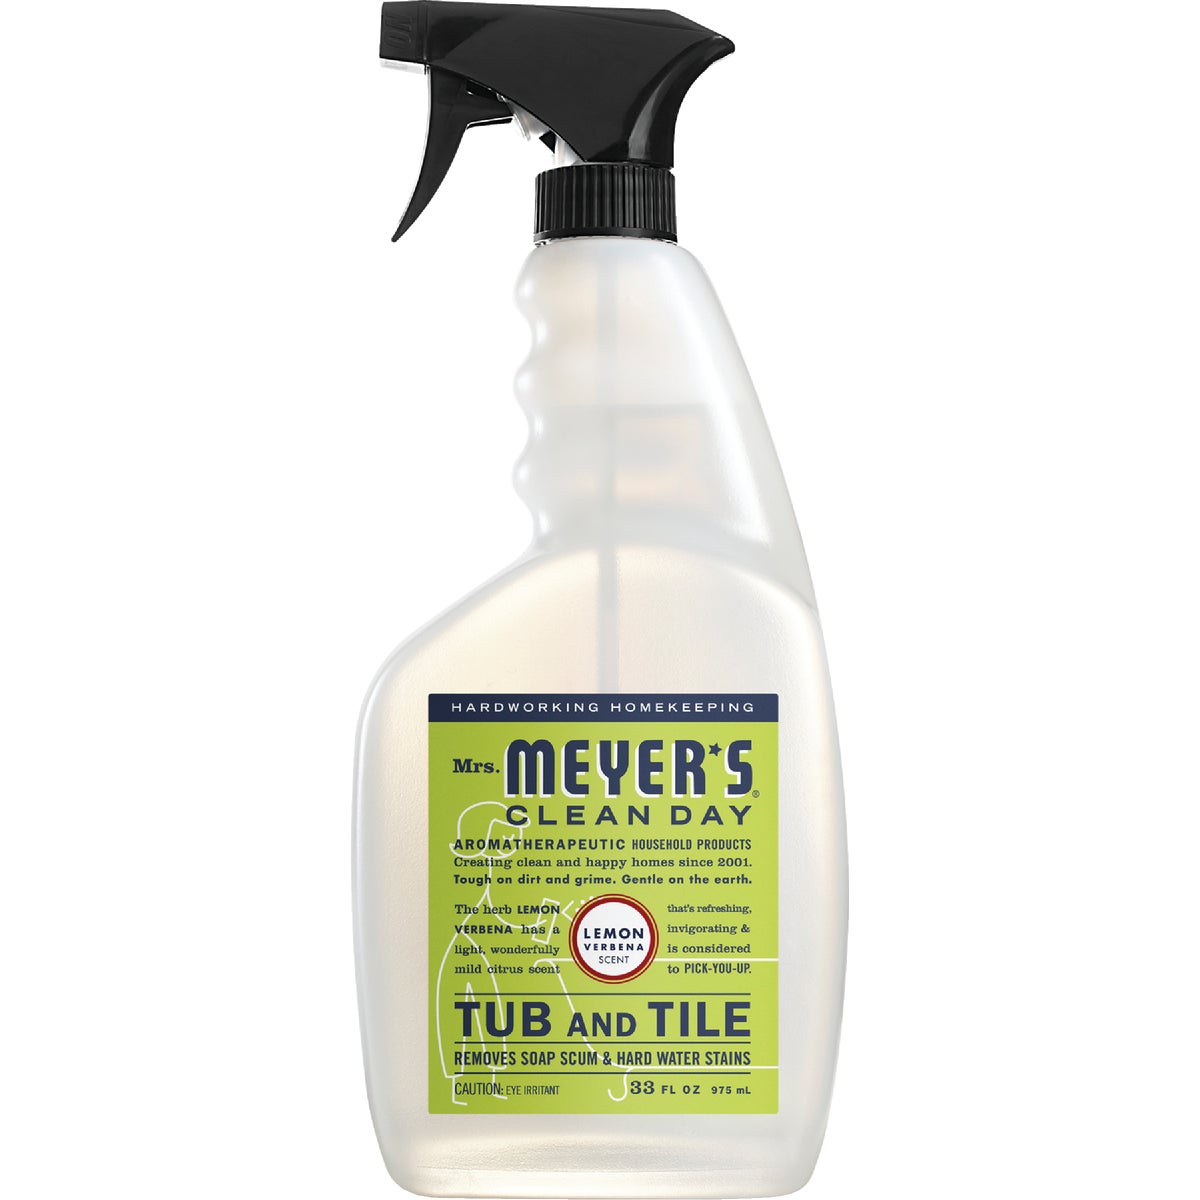 Mrs. Meyer's Clean Day 33 Oz. Lemon Verbena Tub & Tile Bathroom Cleaner